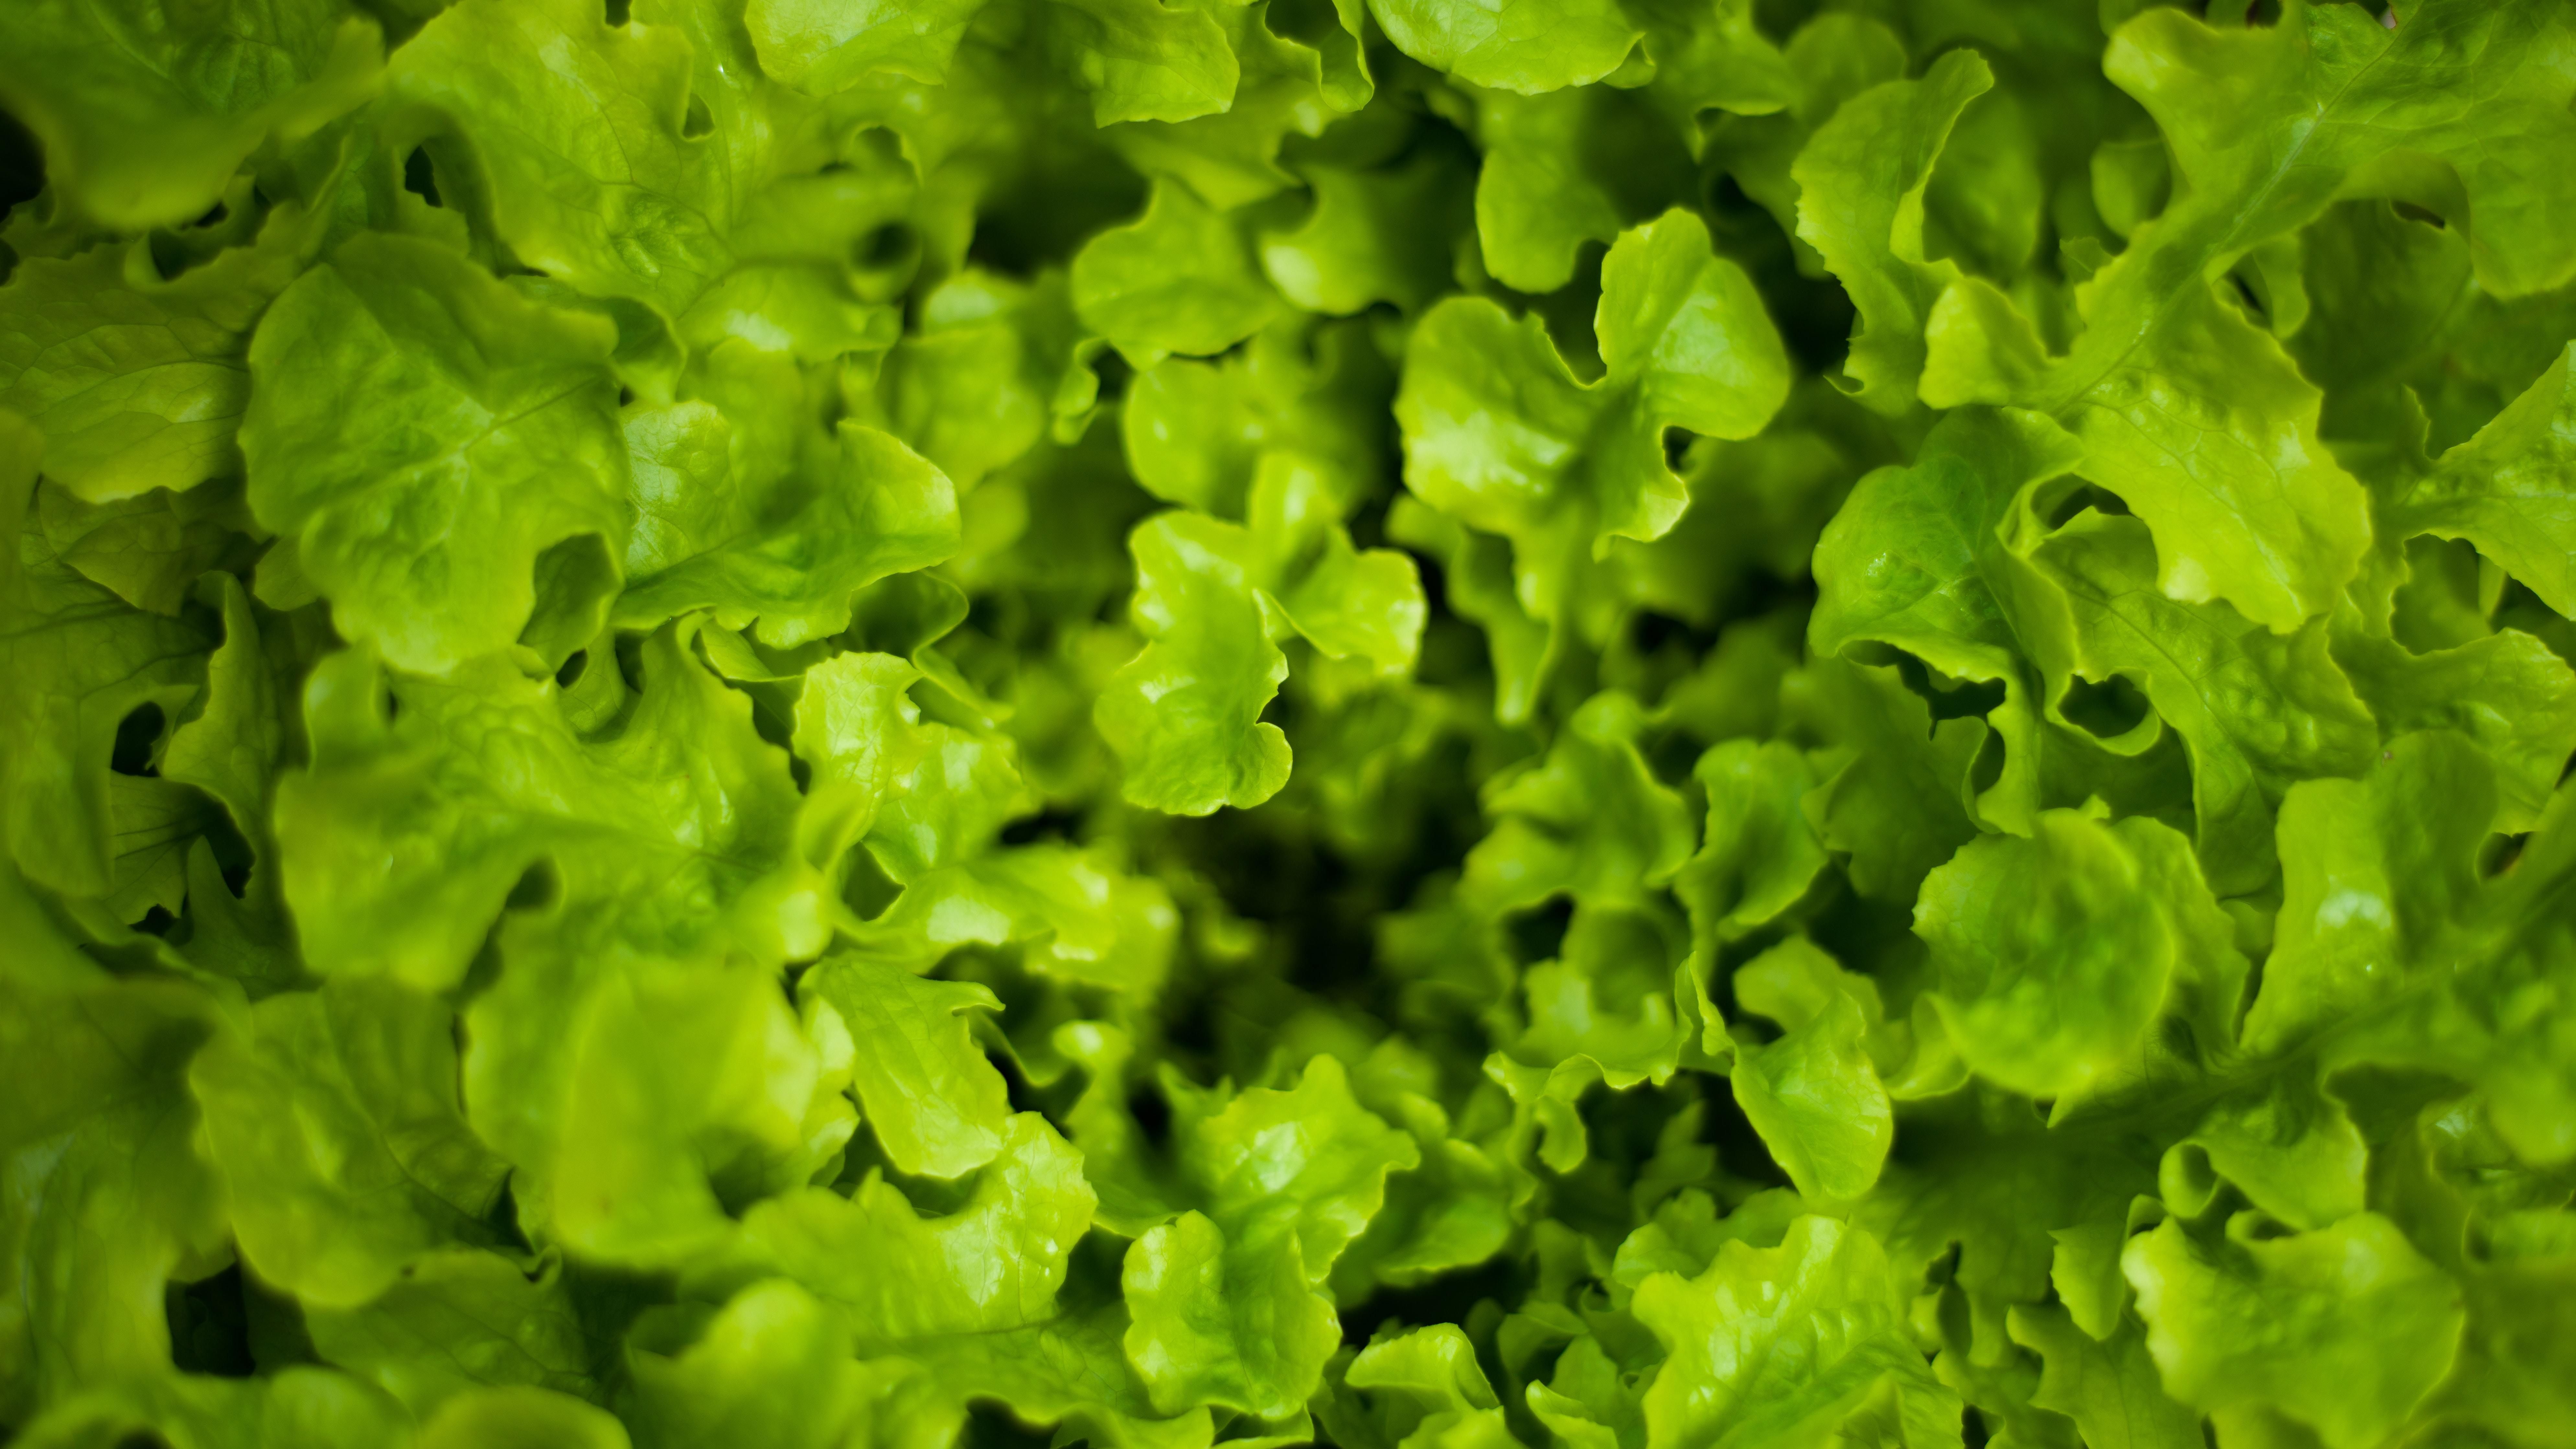 Background image of lettuce